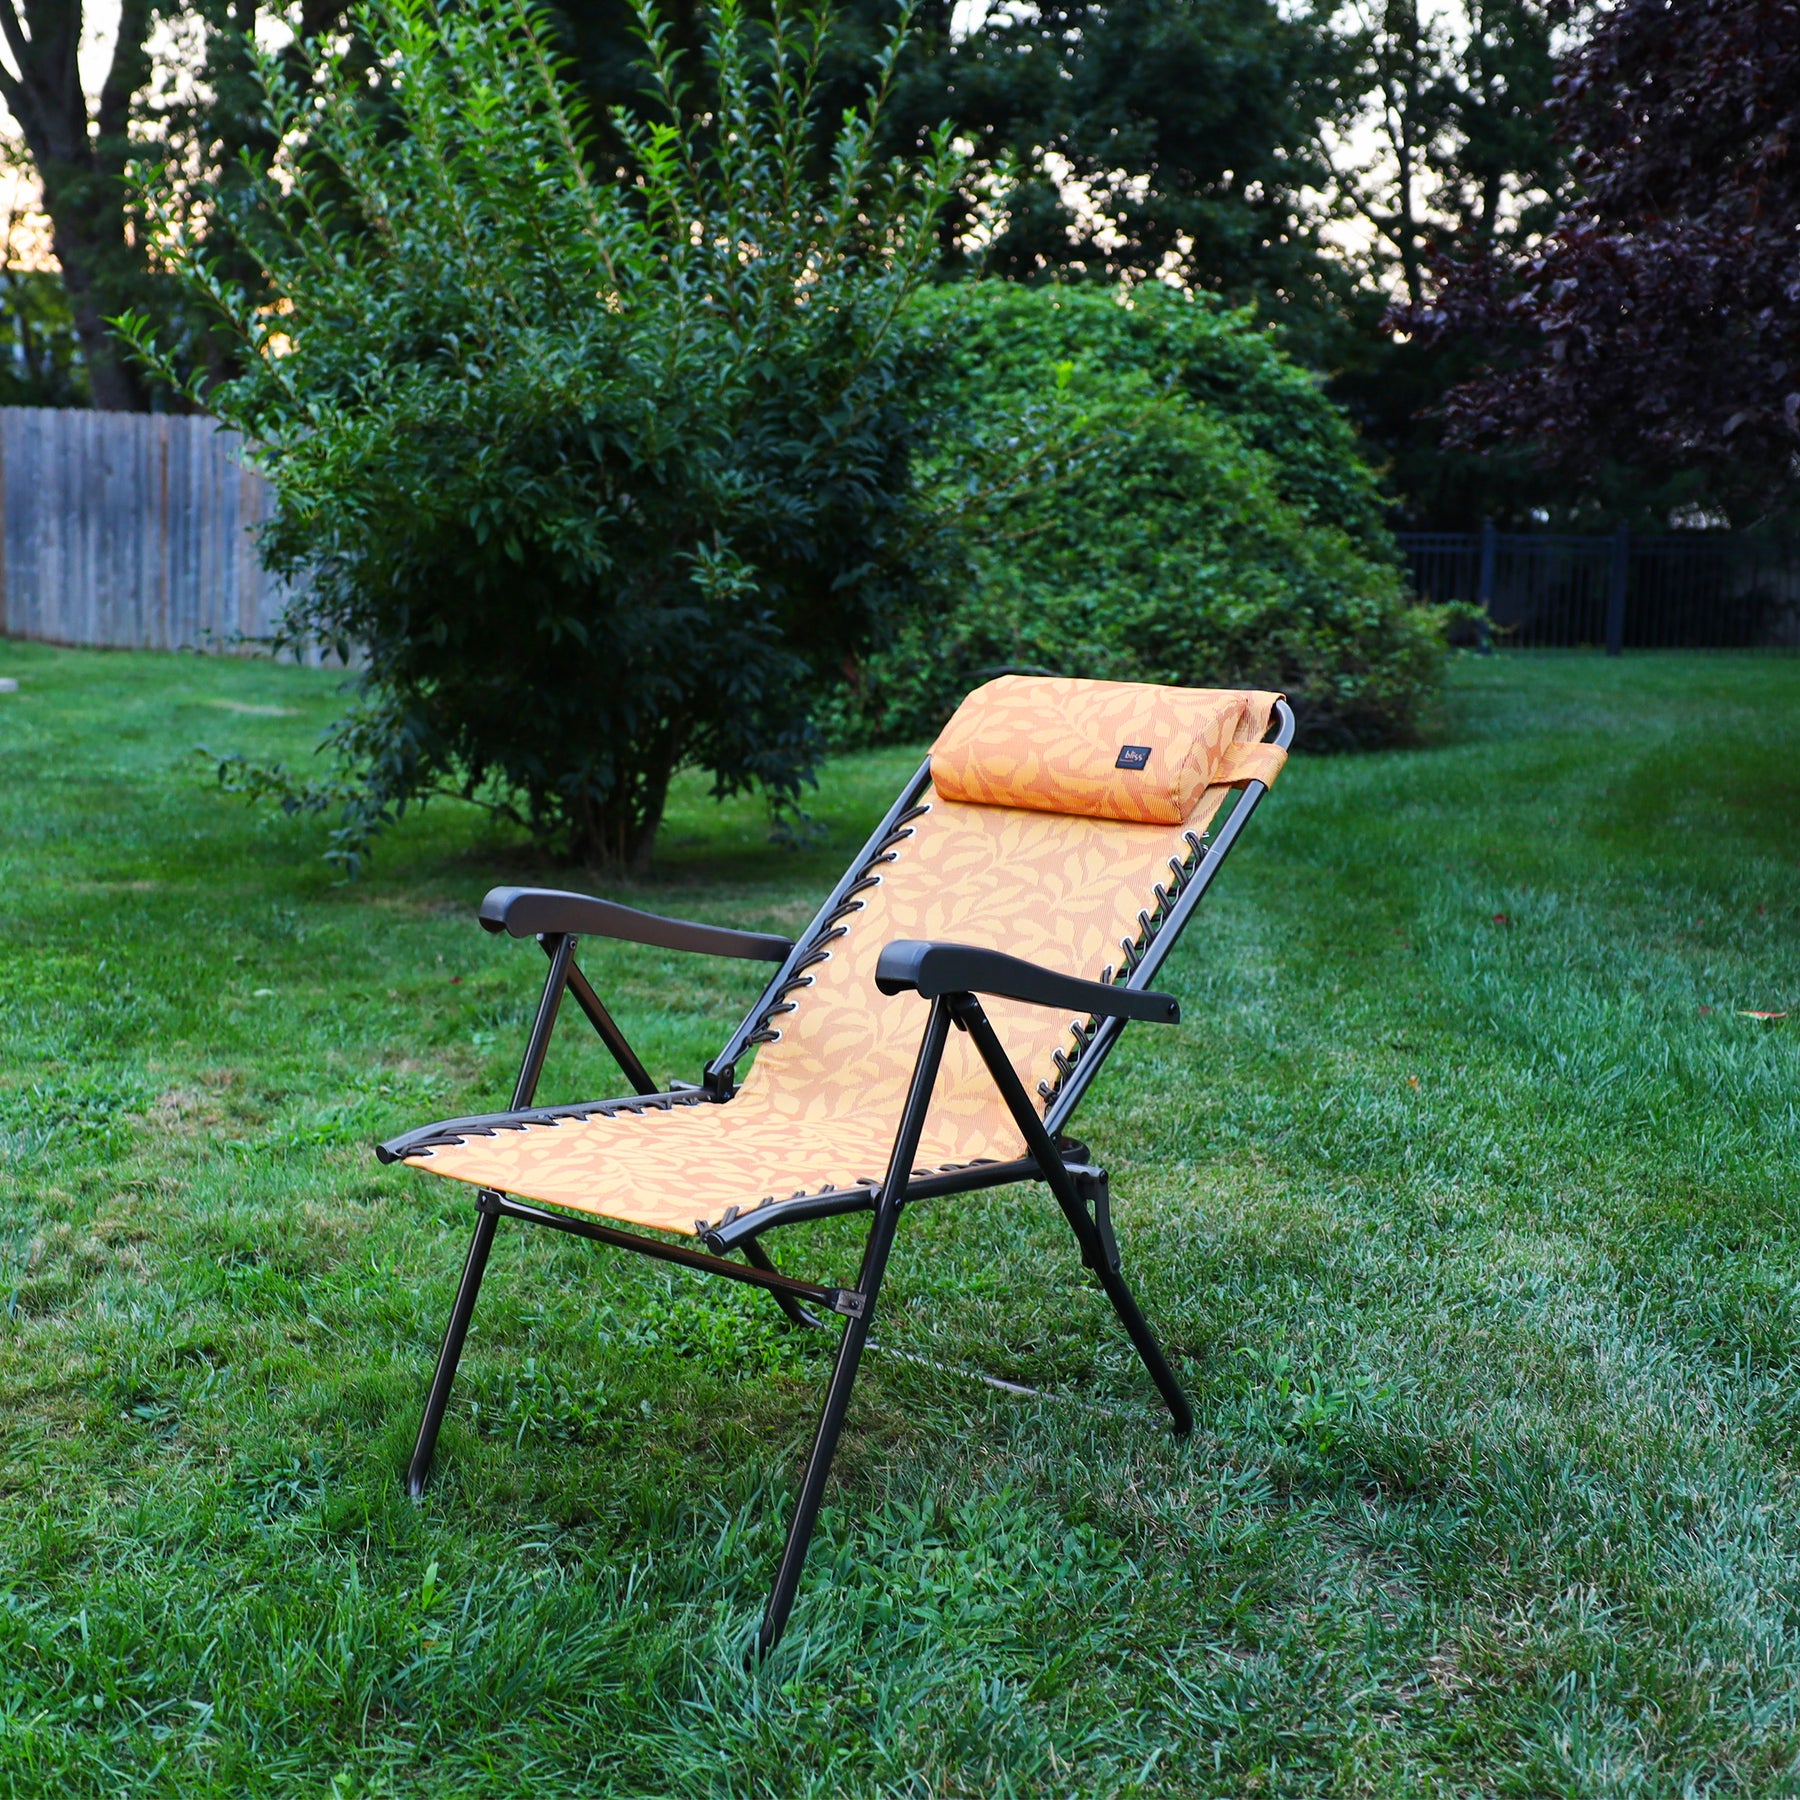 26-inch Reclining Amber Leaf Sling Chair on a lawn.